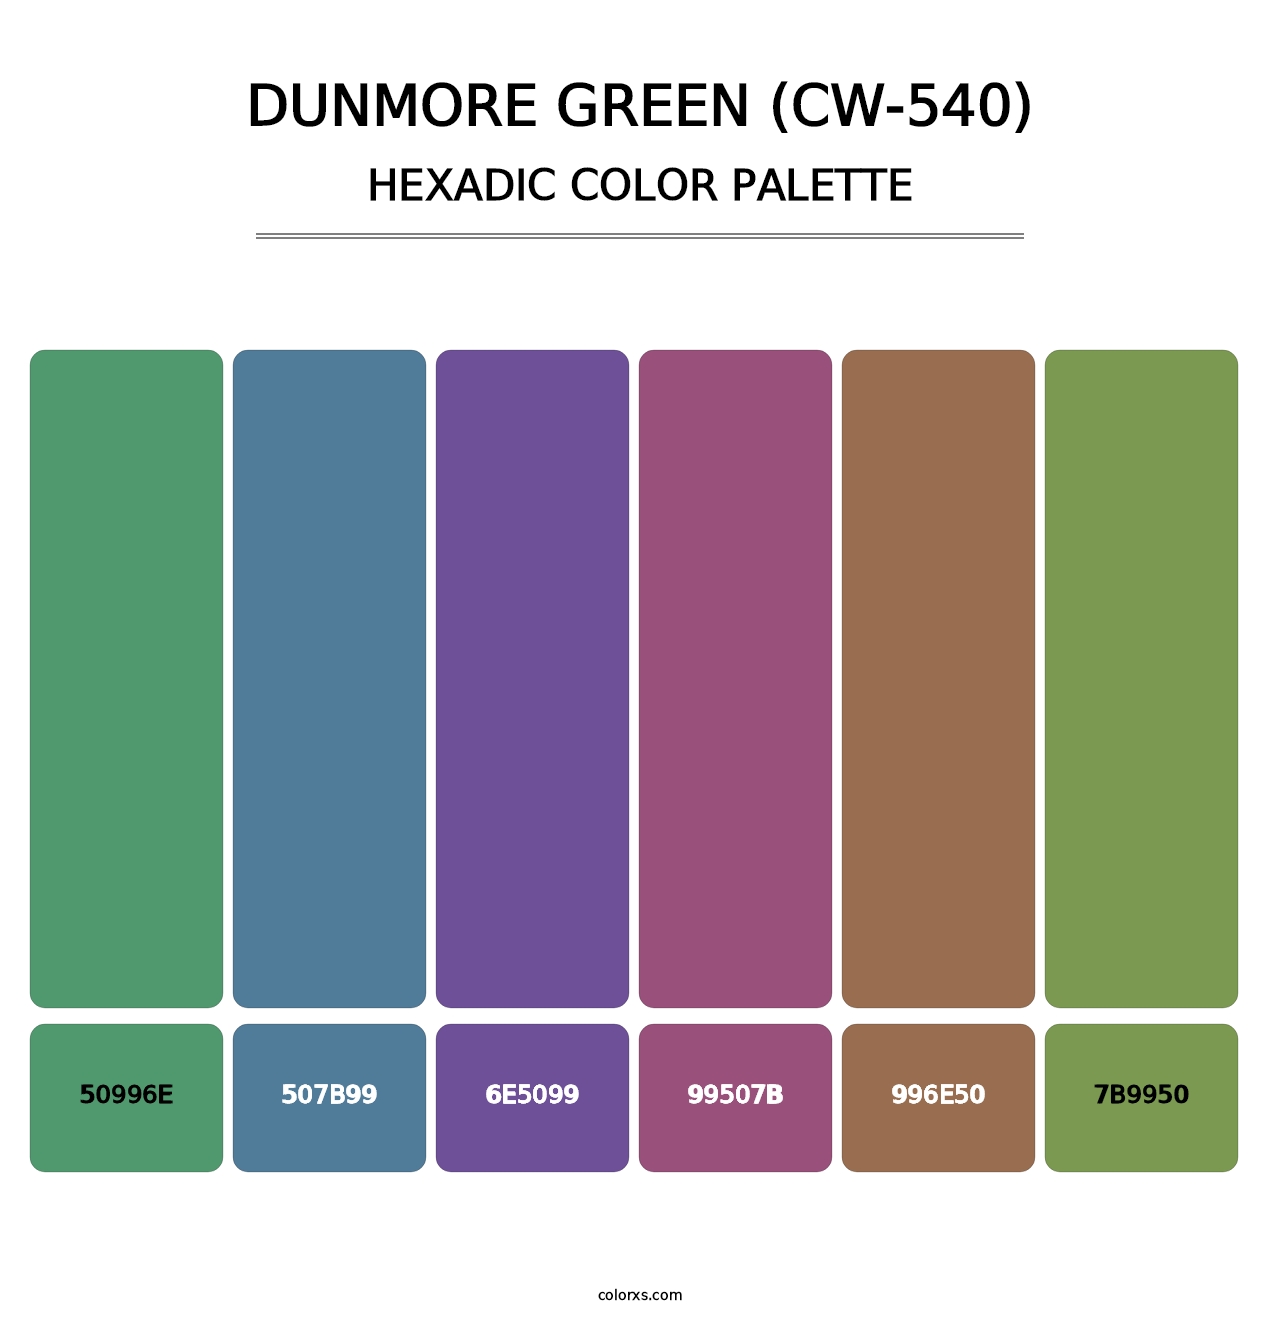 Dunmore Green (CW-540) - Hexadic Color Palette